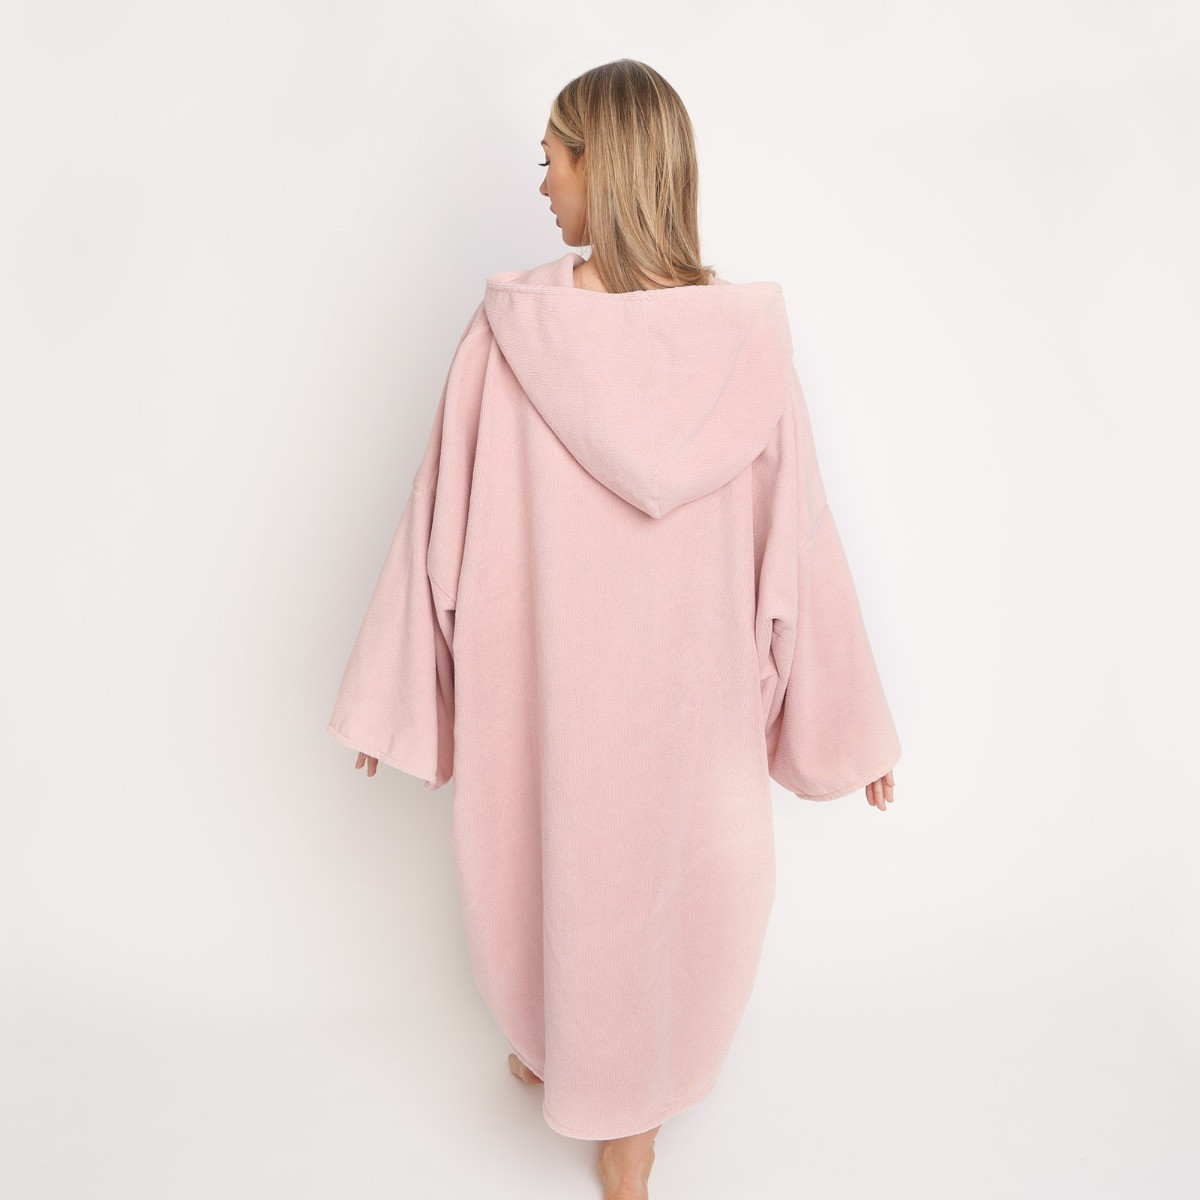 Brentfords Adult Poncho Oversized Changing Robe - Blush Pink>